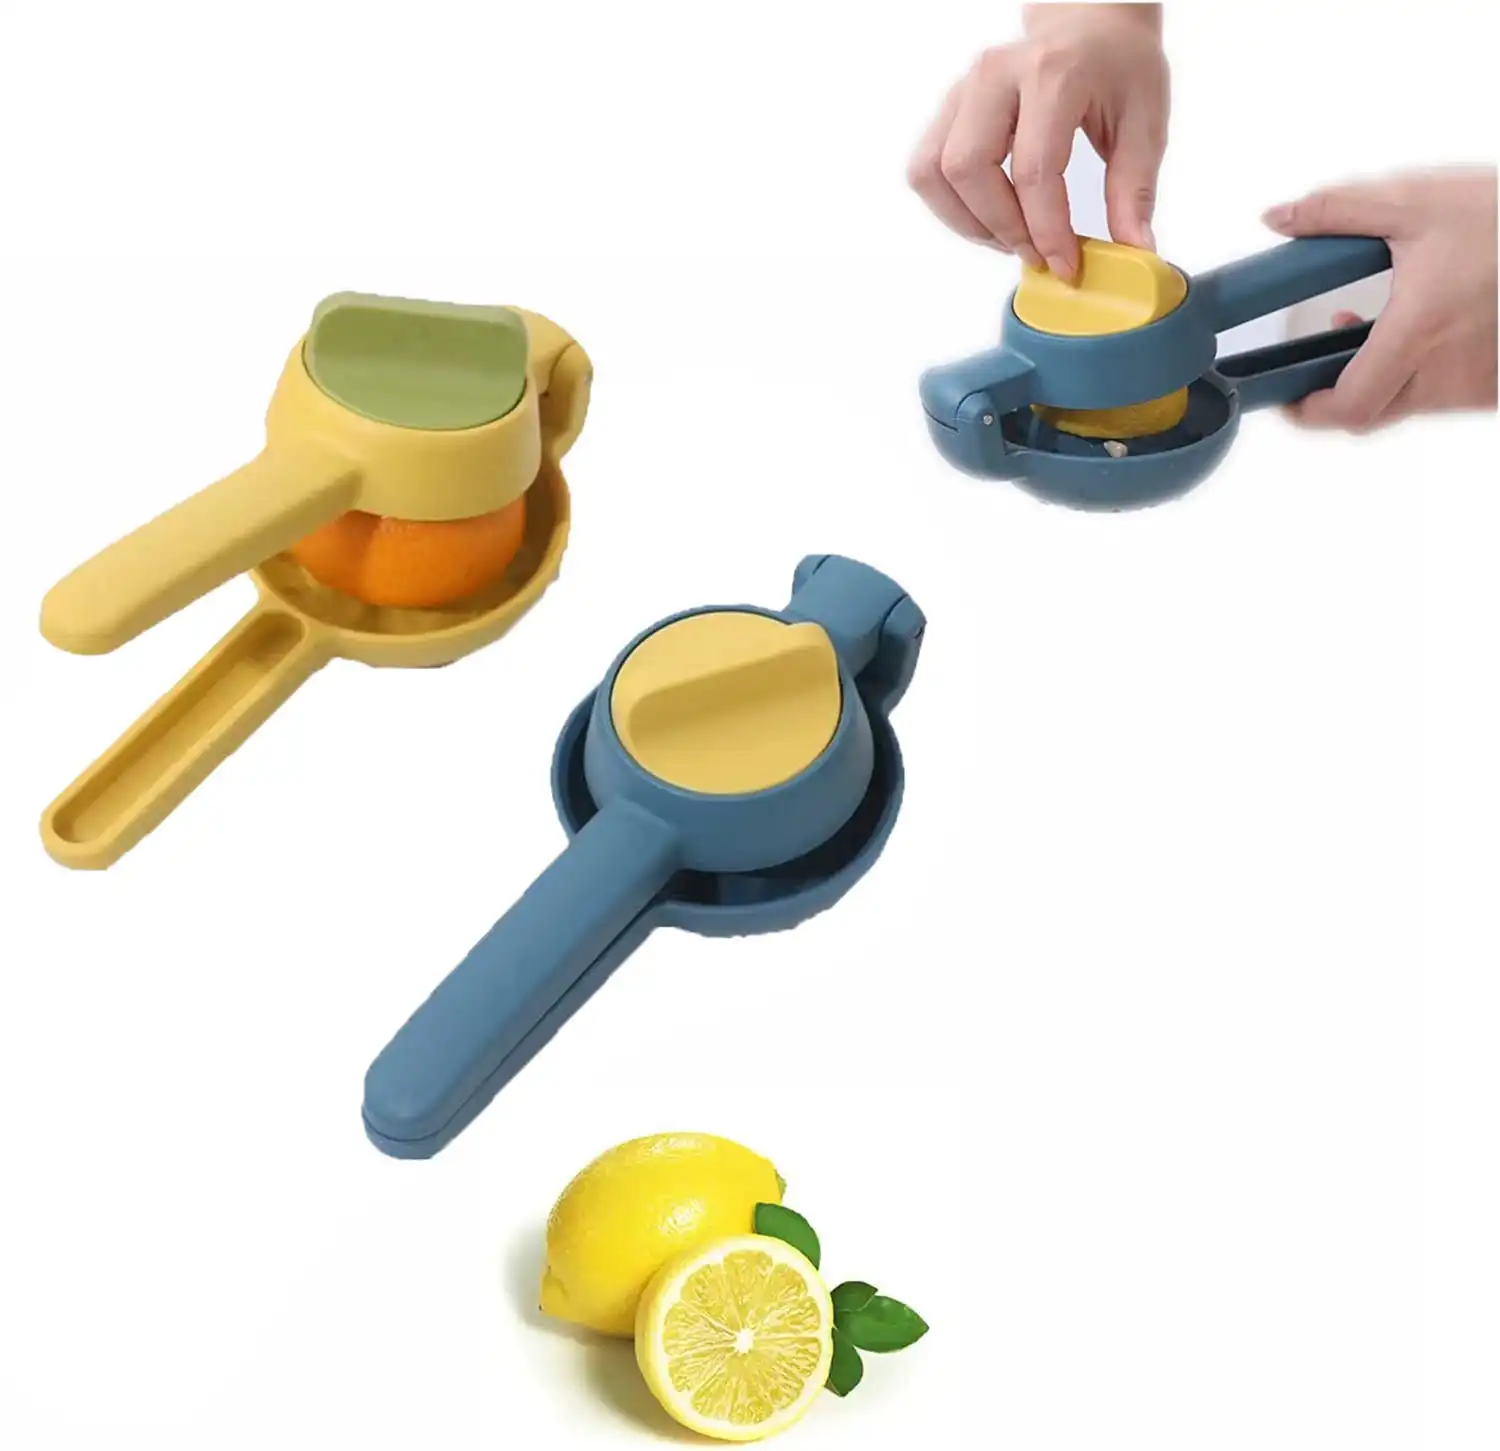 2pcs Manual Juicer Citrus Lemon Squeezer Fruit Juicer Hand Juicer Kitchen Tool